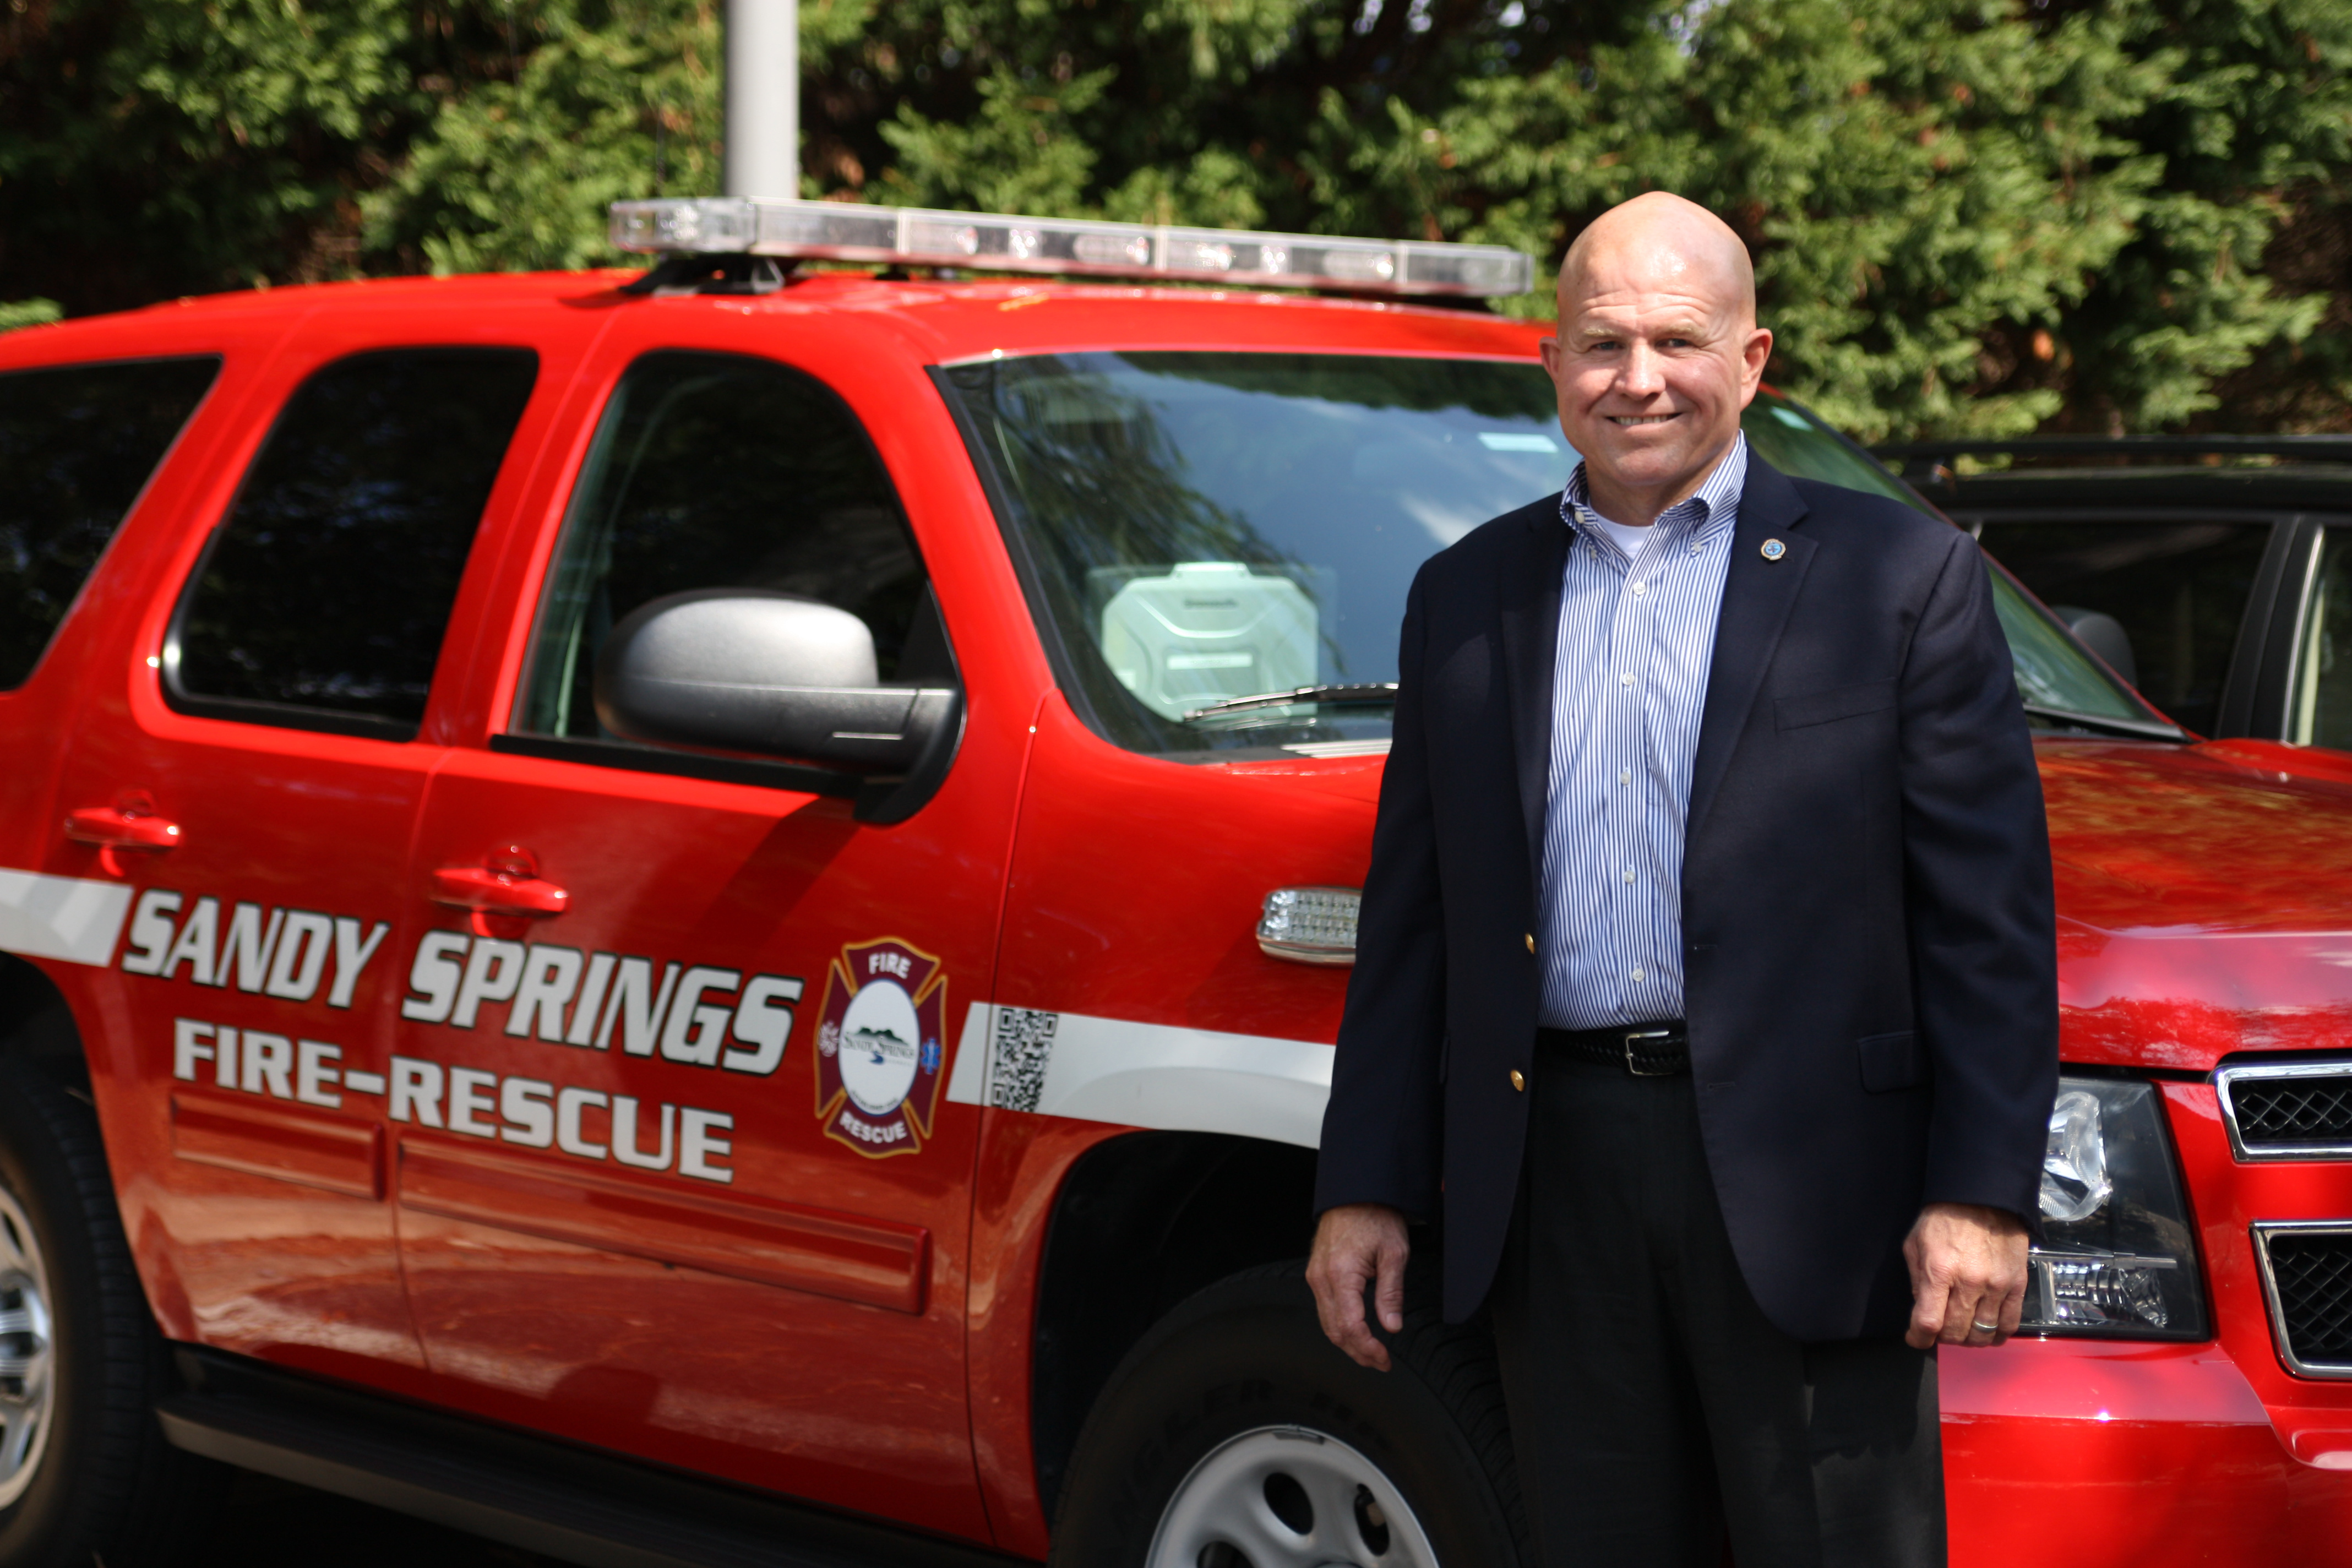 Sandy Springs Fire Chief Keith Sanders